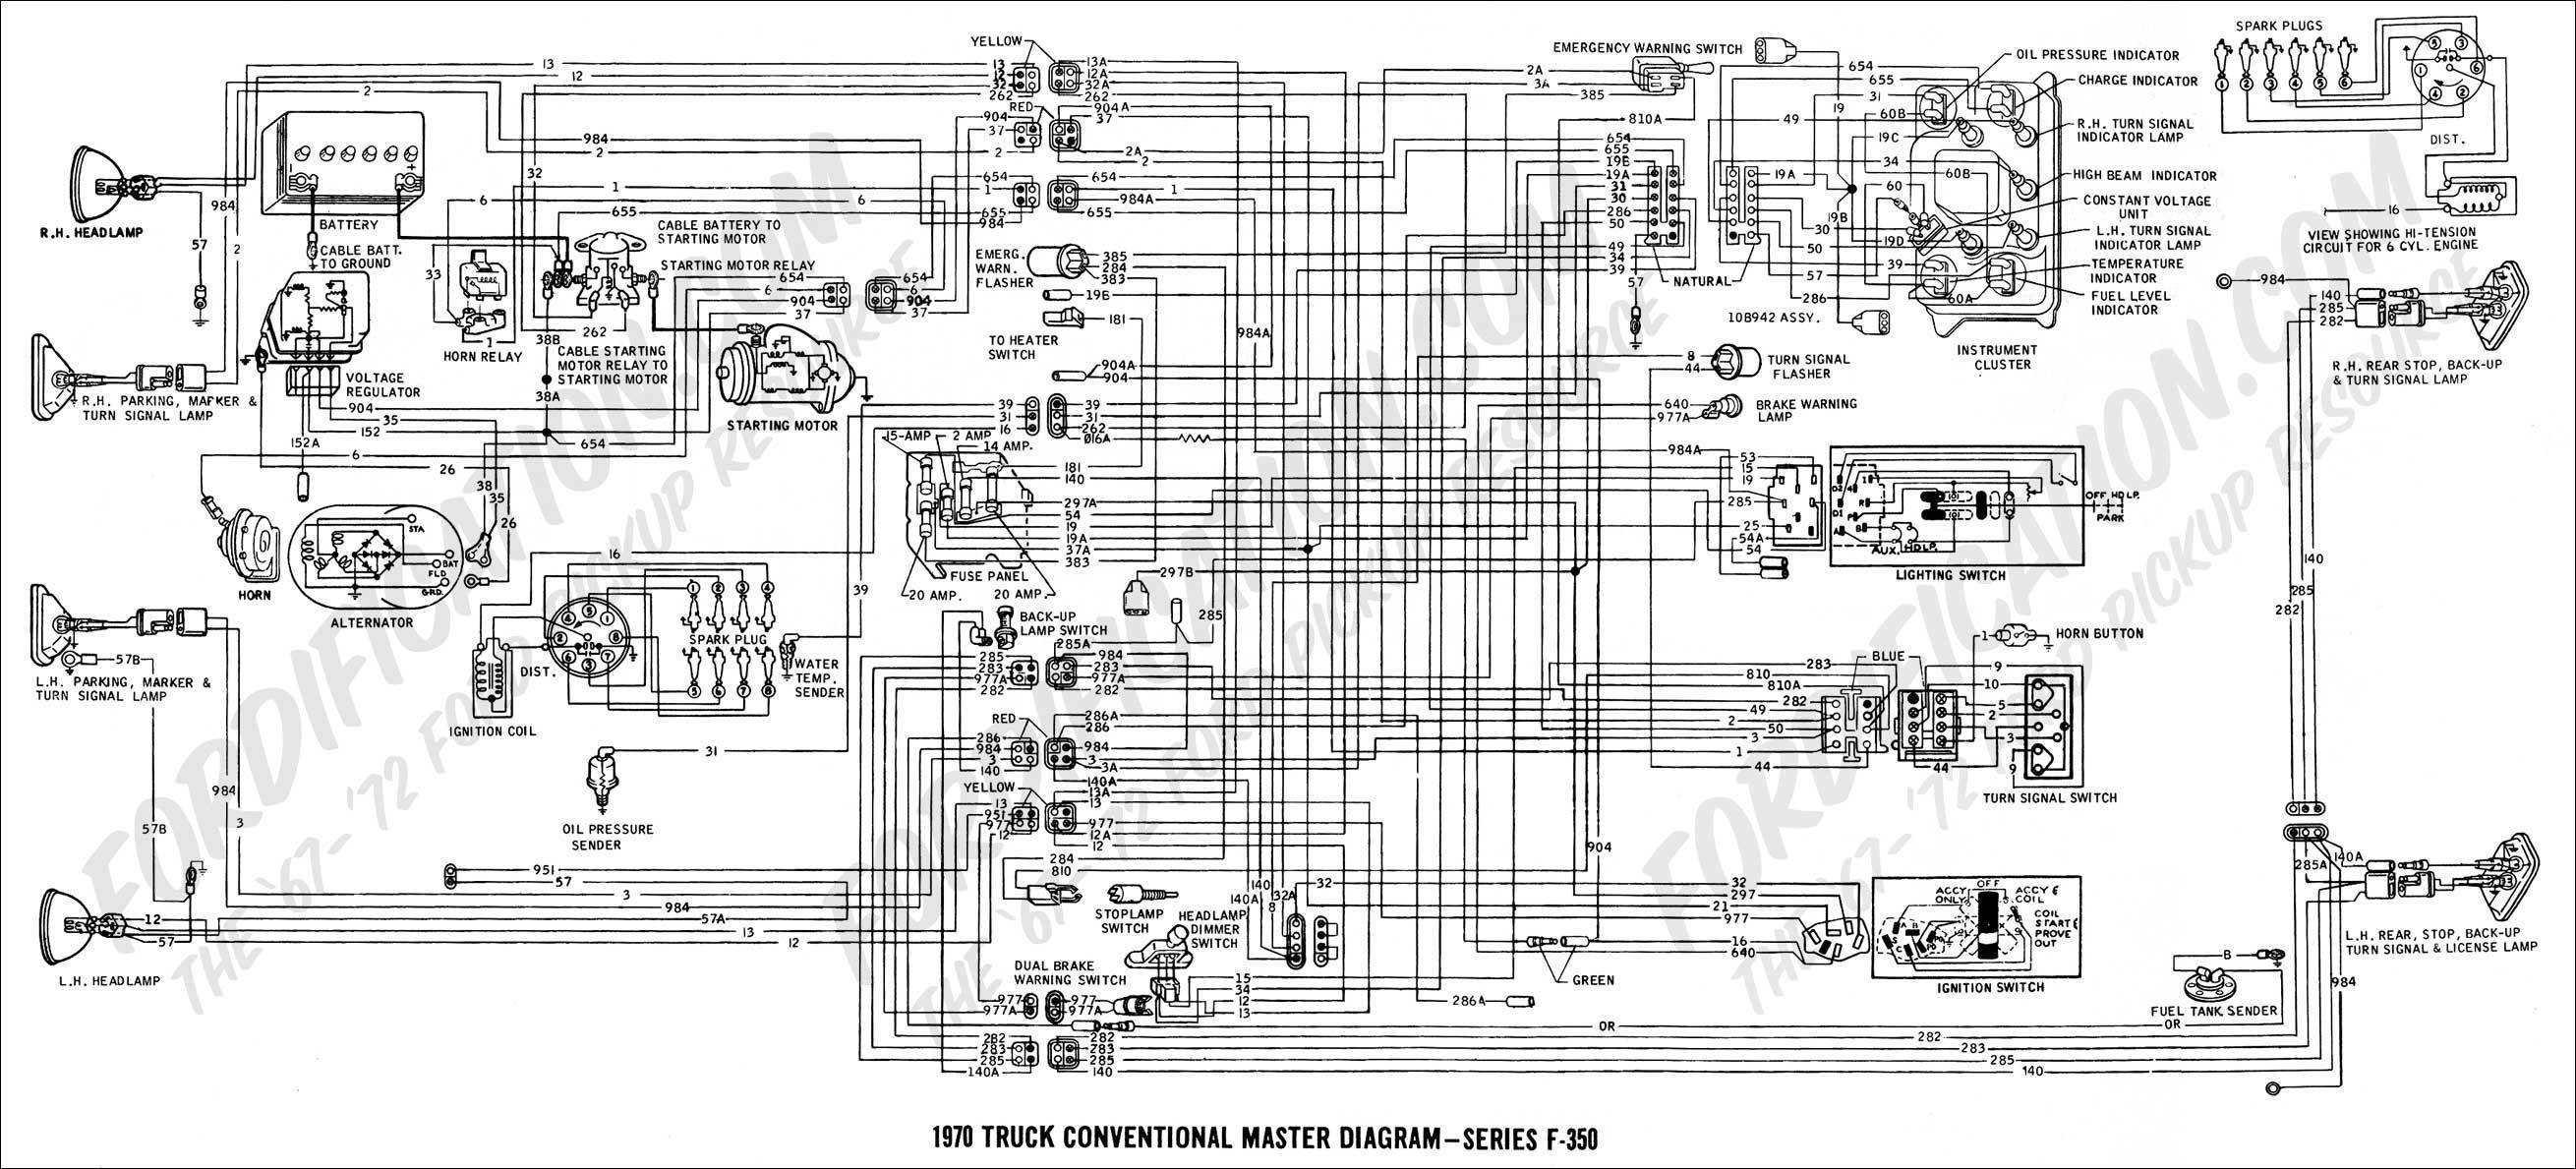 1998 ford Escort Engine Diagram ford Au Stereo Wiring Diagram Wiring Diagram toolbox Of 1998 ford Escort Engine Diagram